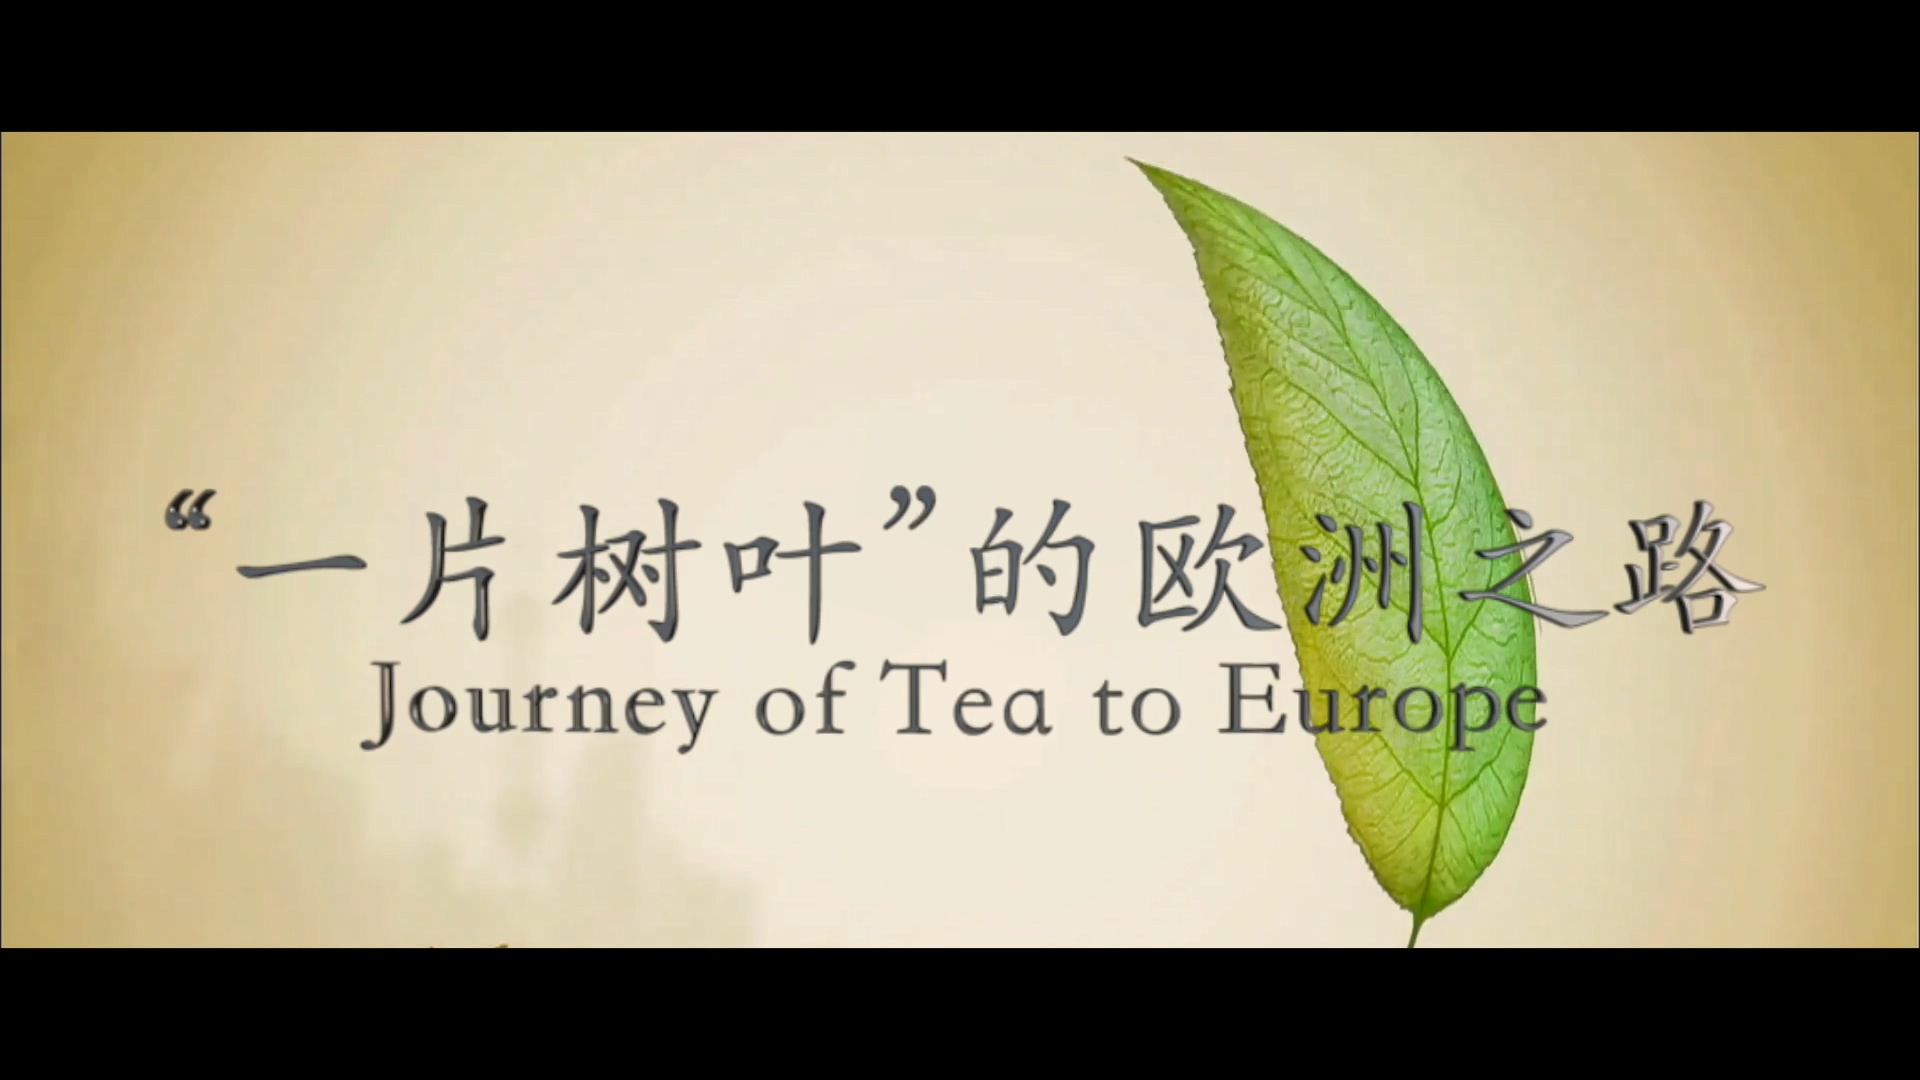 Journey of Tea to Europe